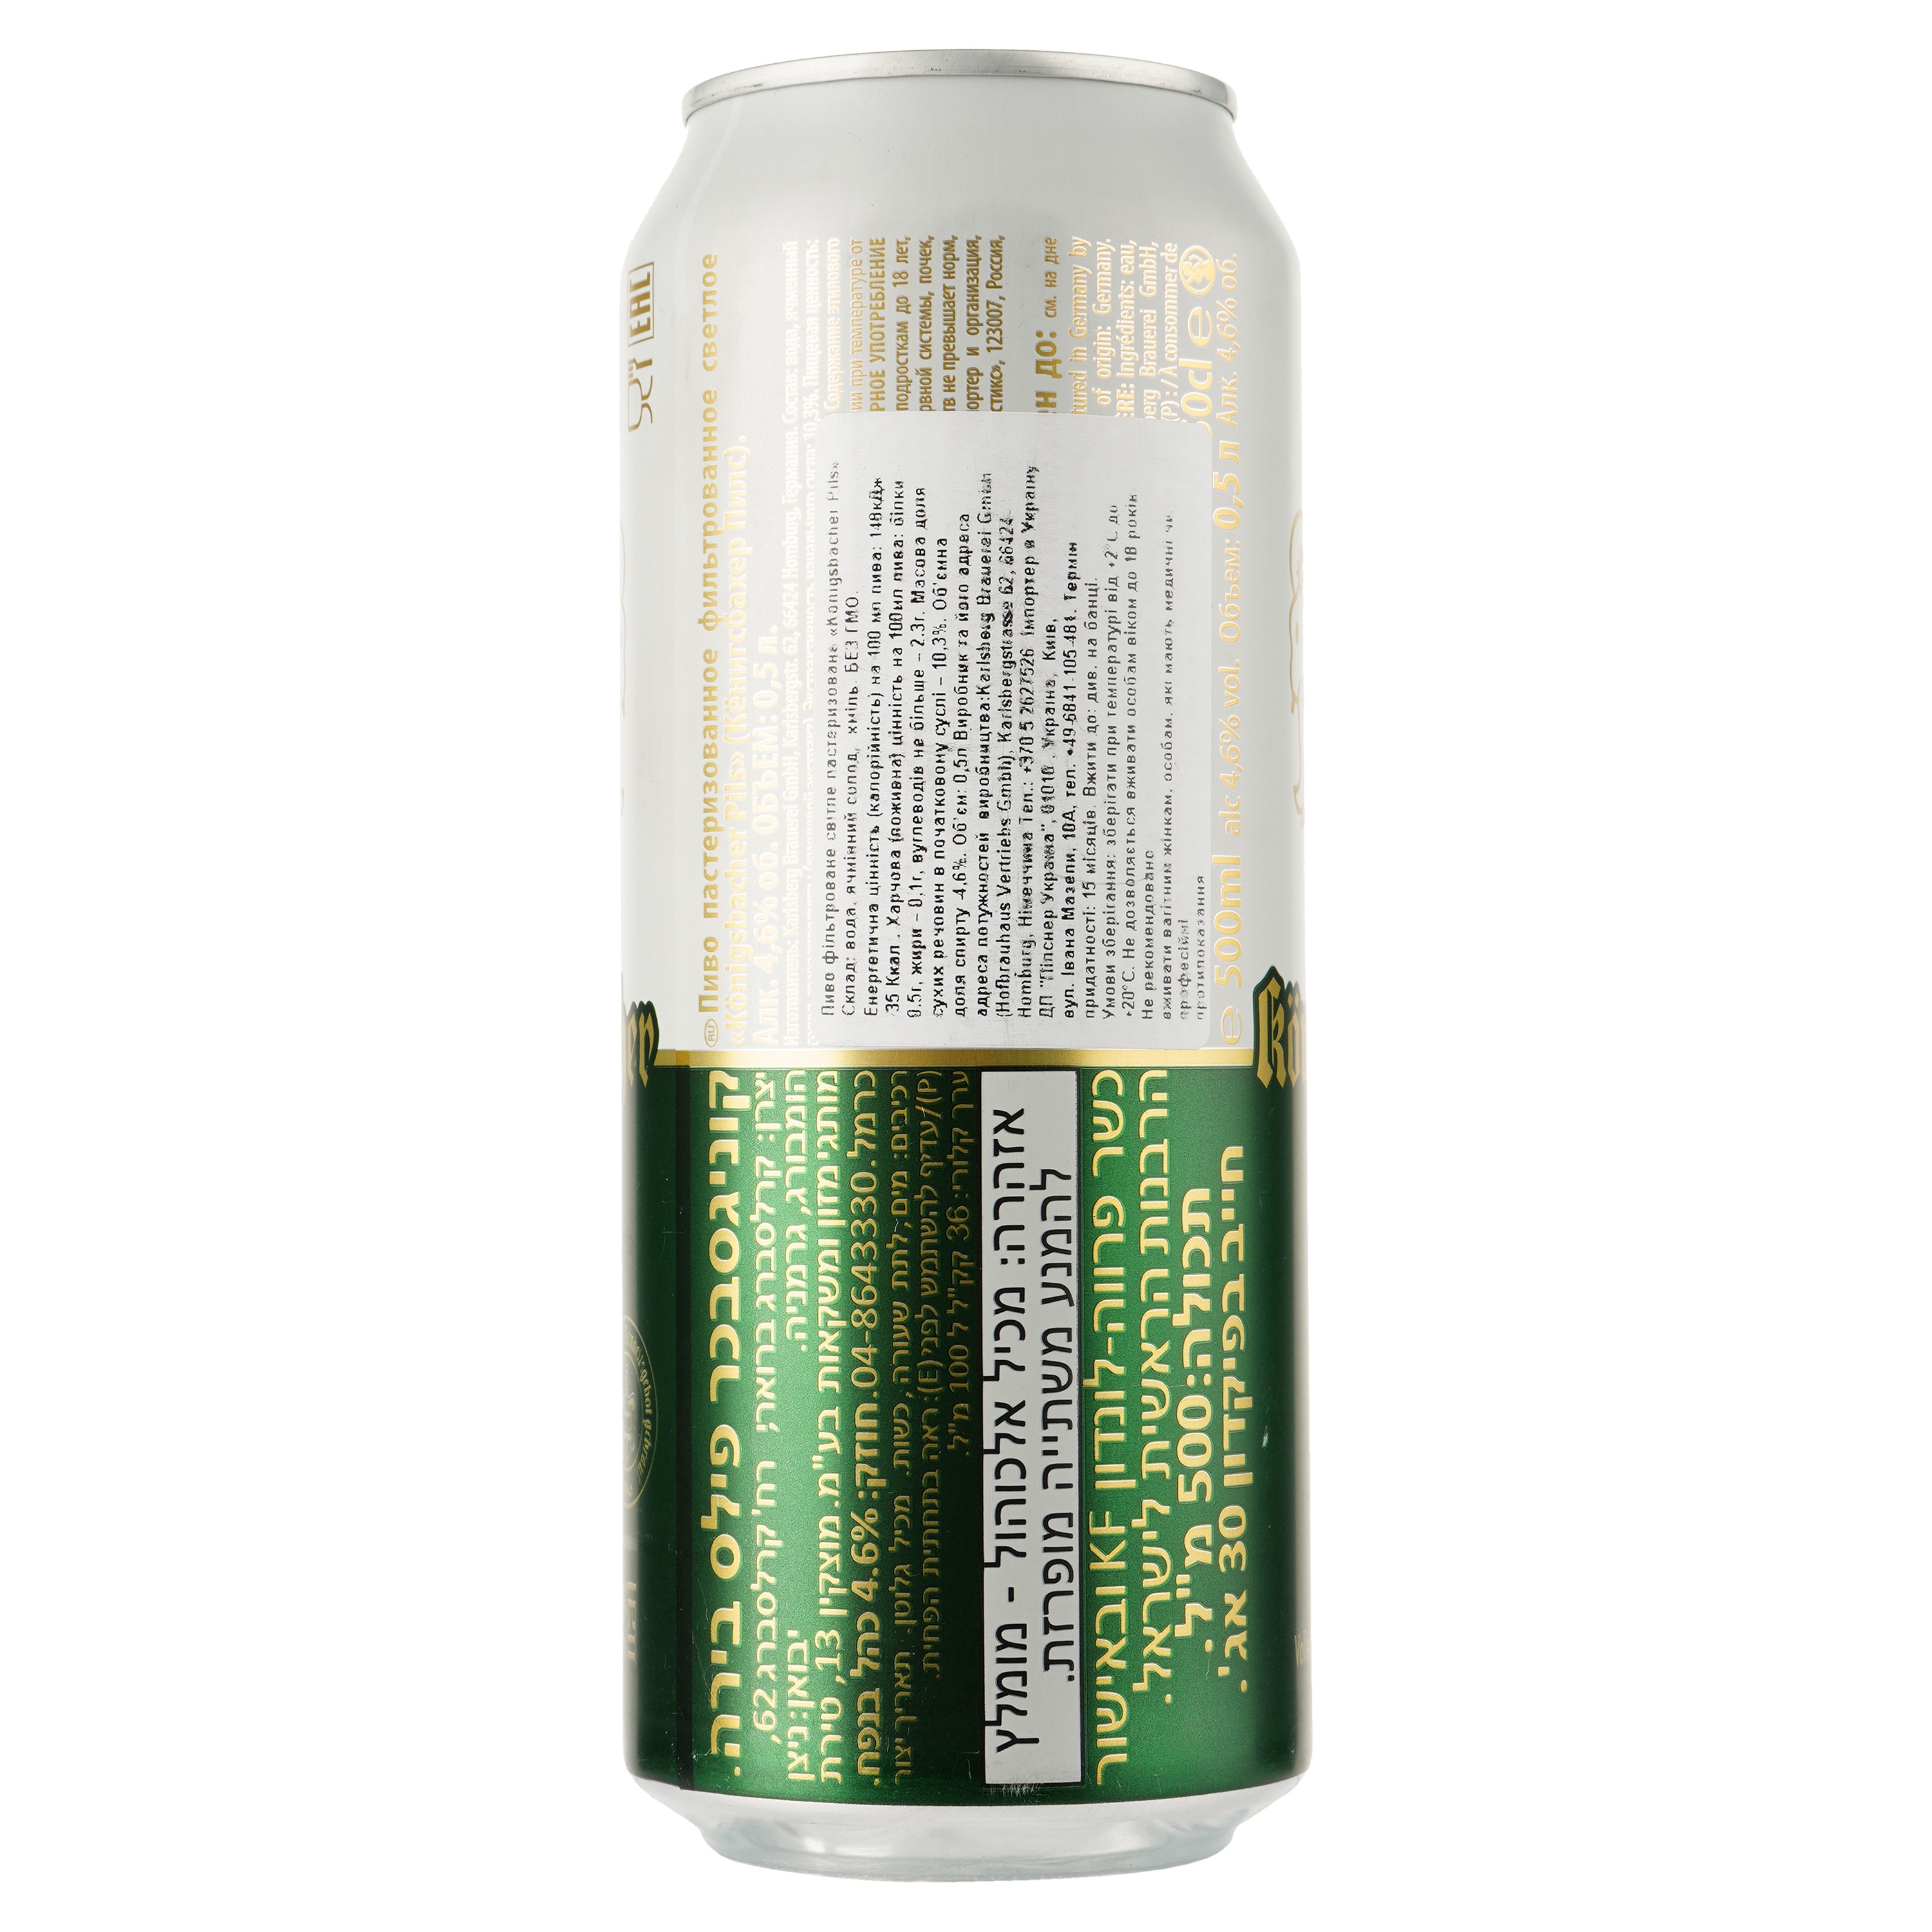 Пиво Konigsbacher Pils светлое, 4.6%, ж/б, 0.5 л - фото 2